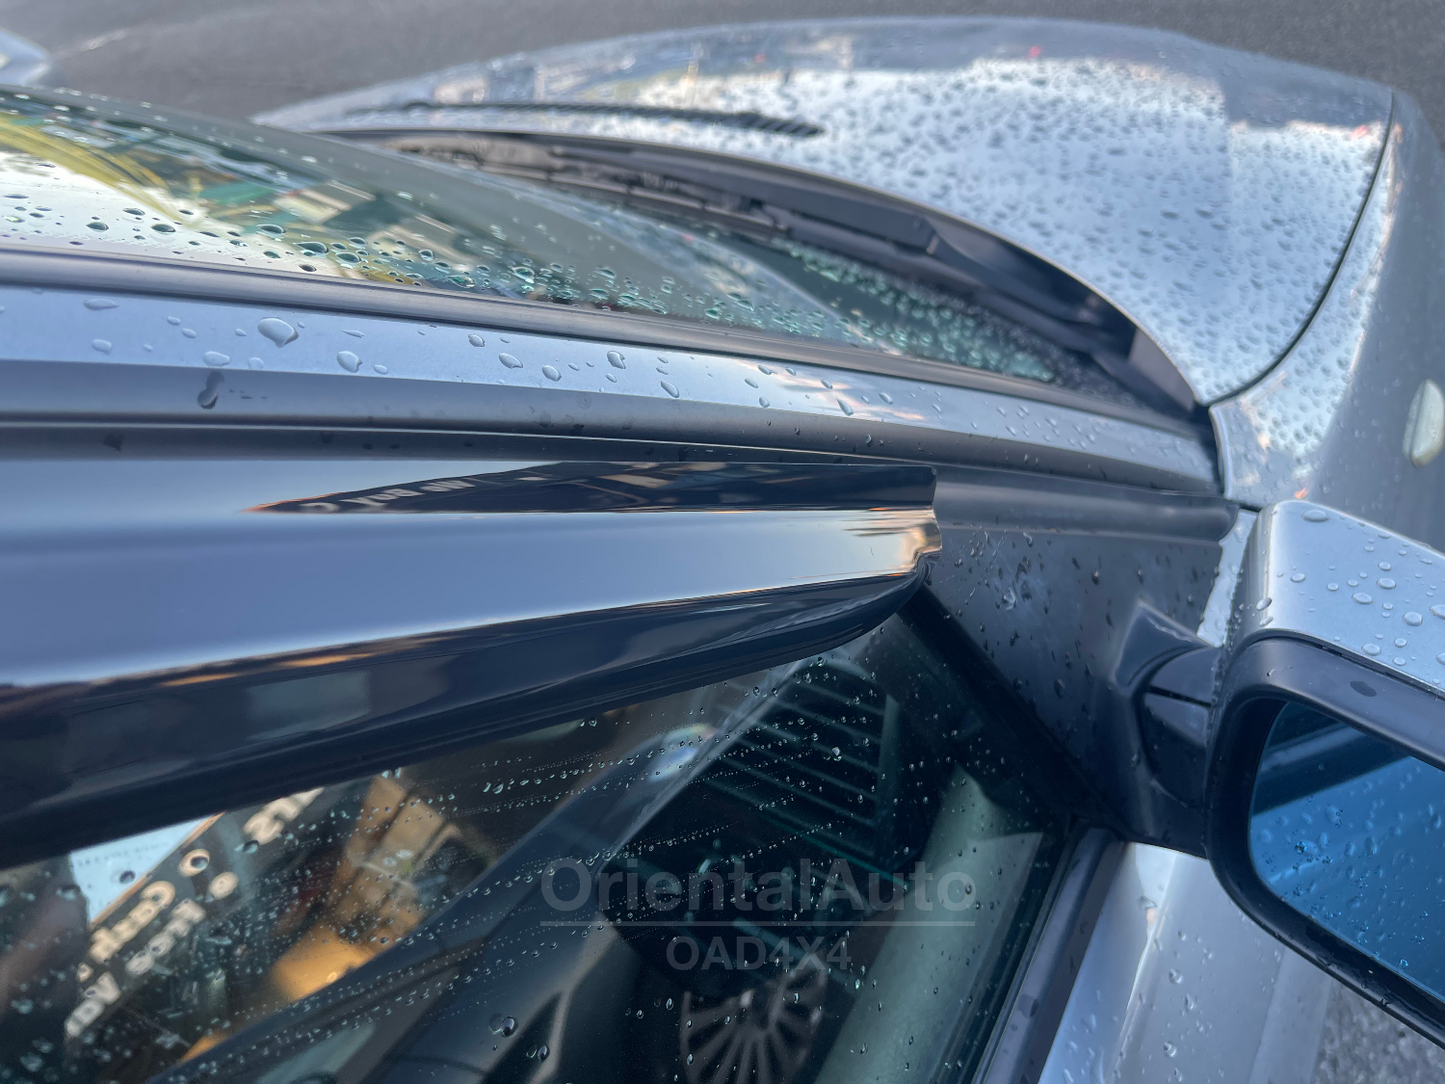 Luxury Weathershields Weather Shields Window Visor For BMW 3 series E46 sedan 1998-2006